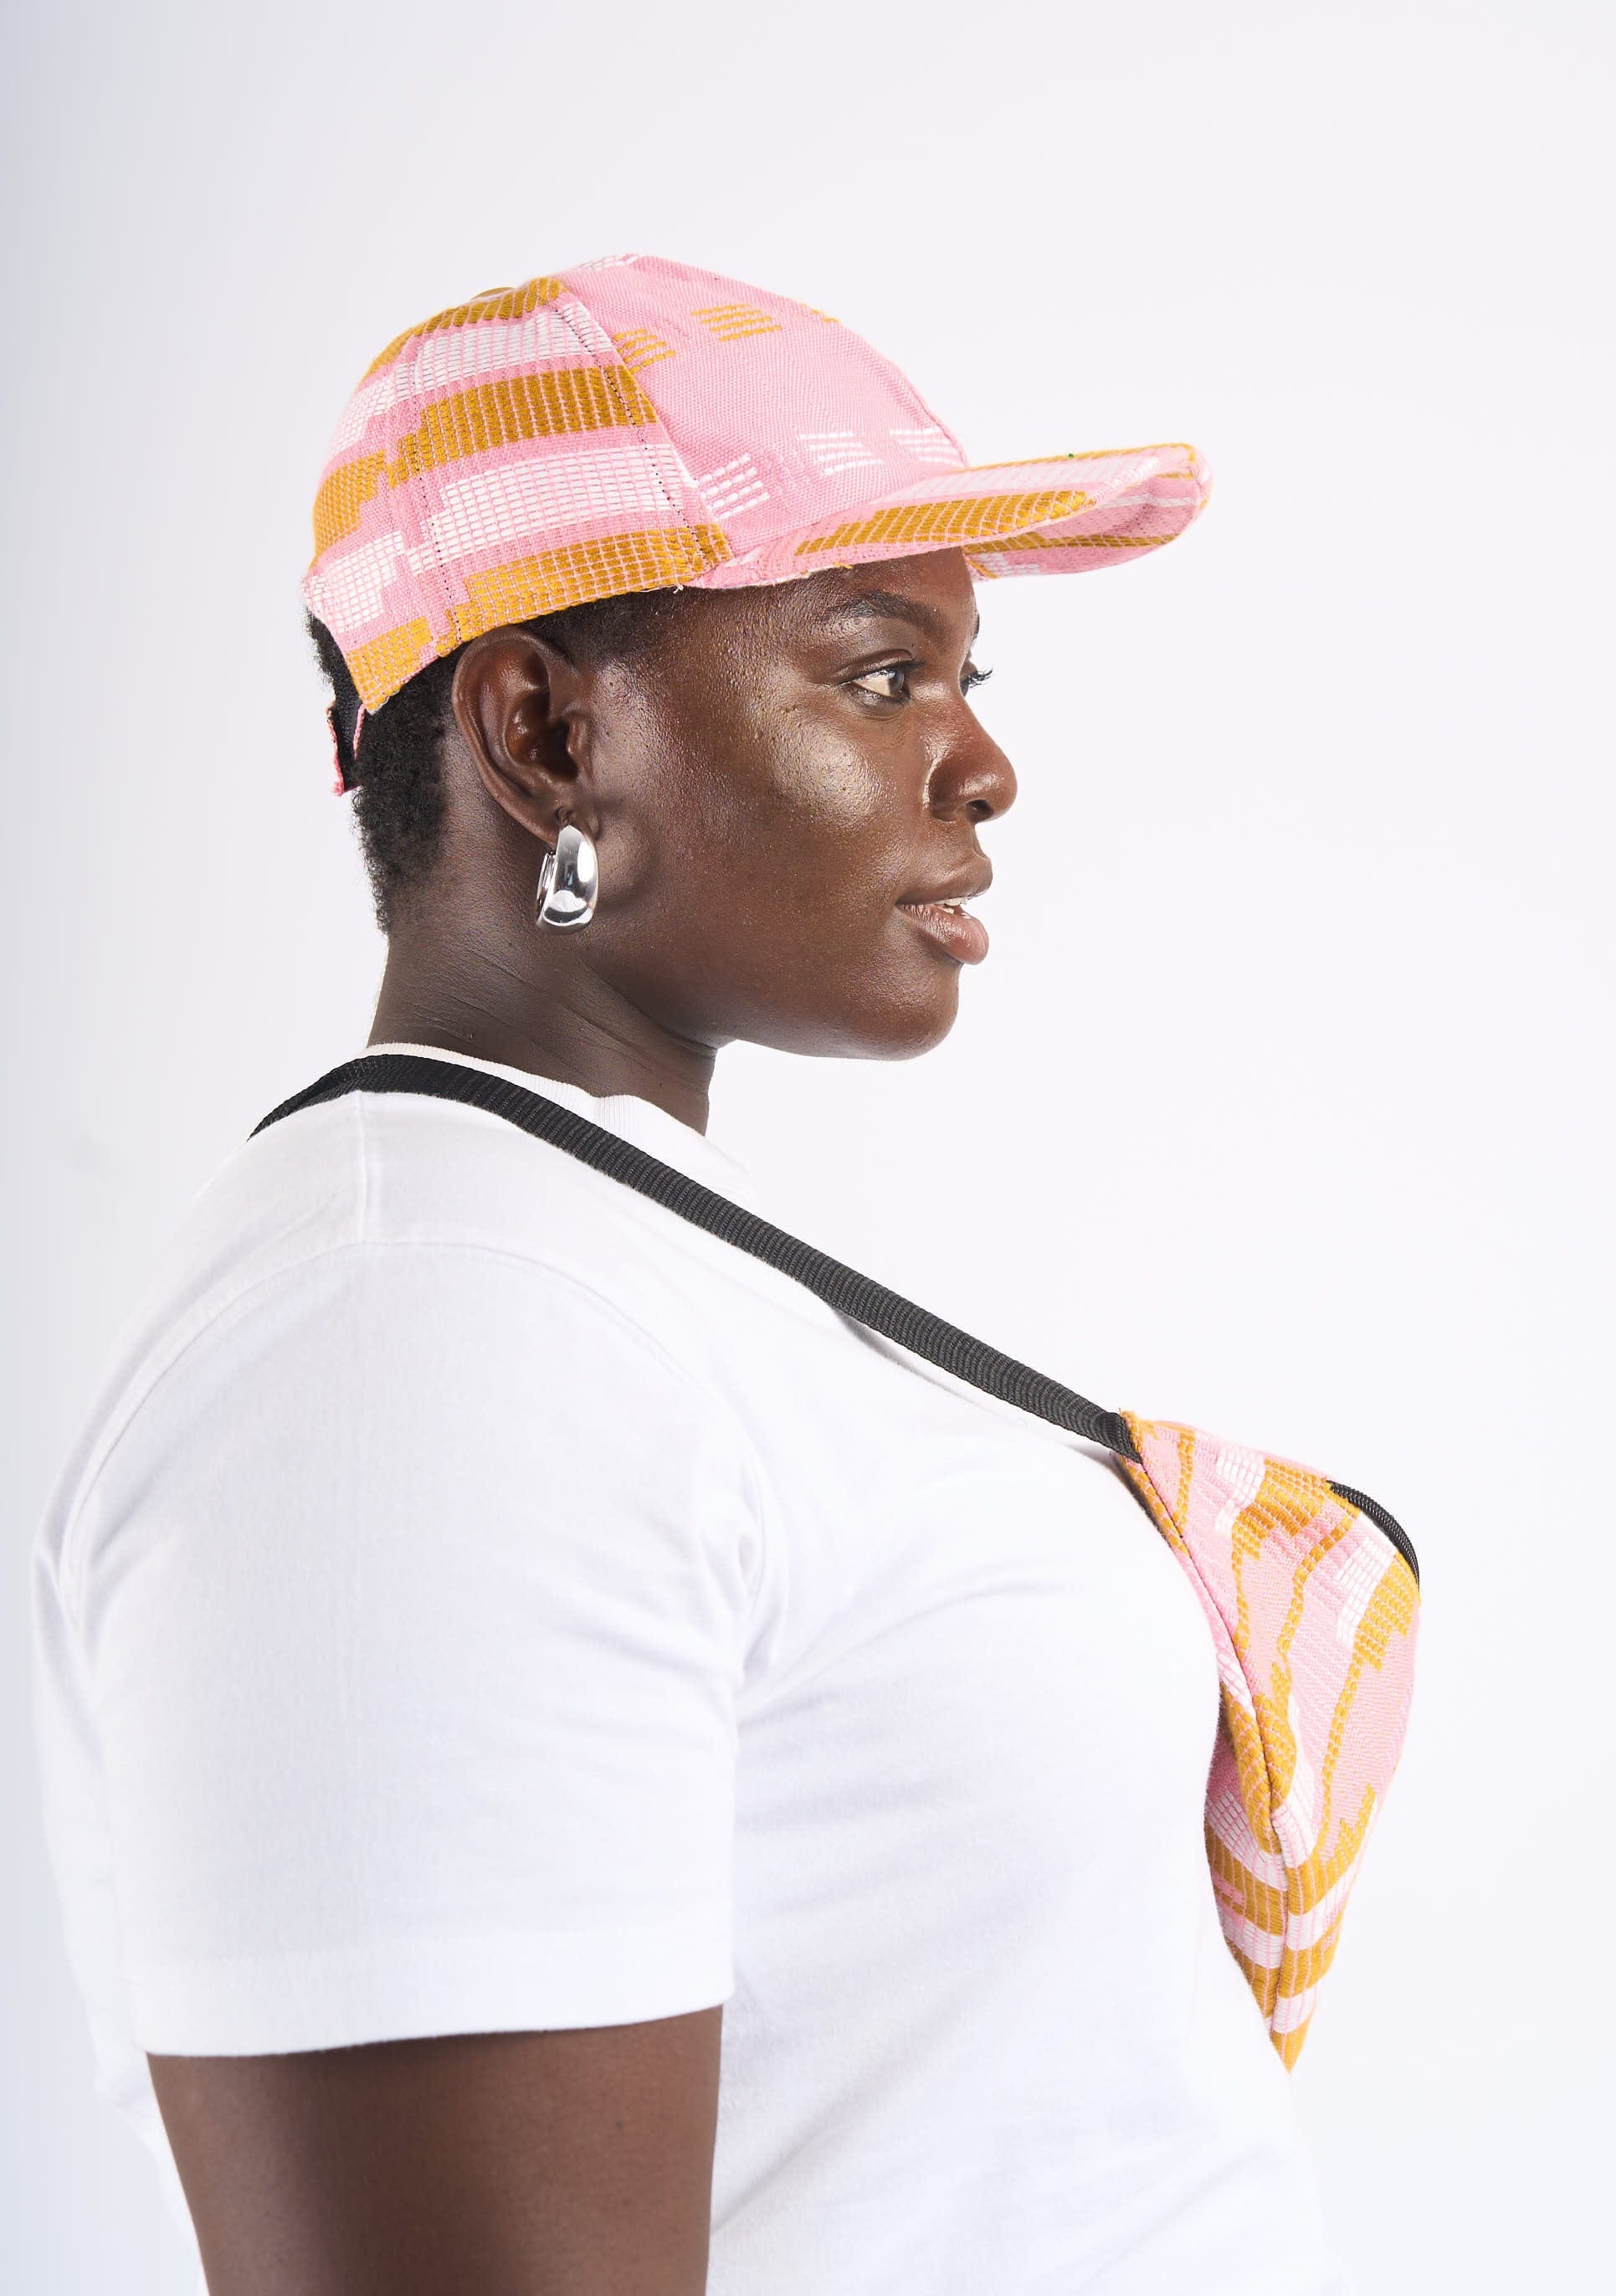 YEVU Accessories - Headwear Kente Cap - Pink Royals